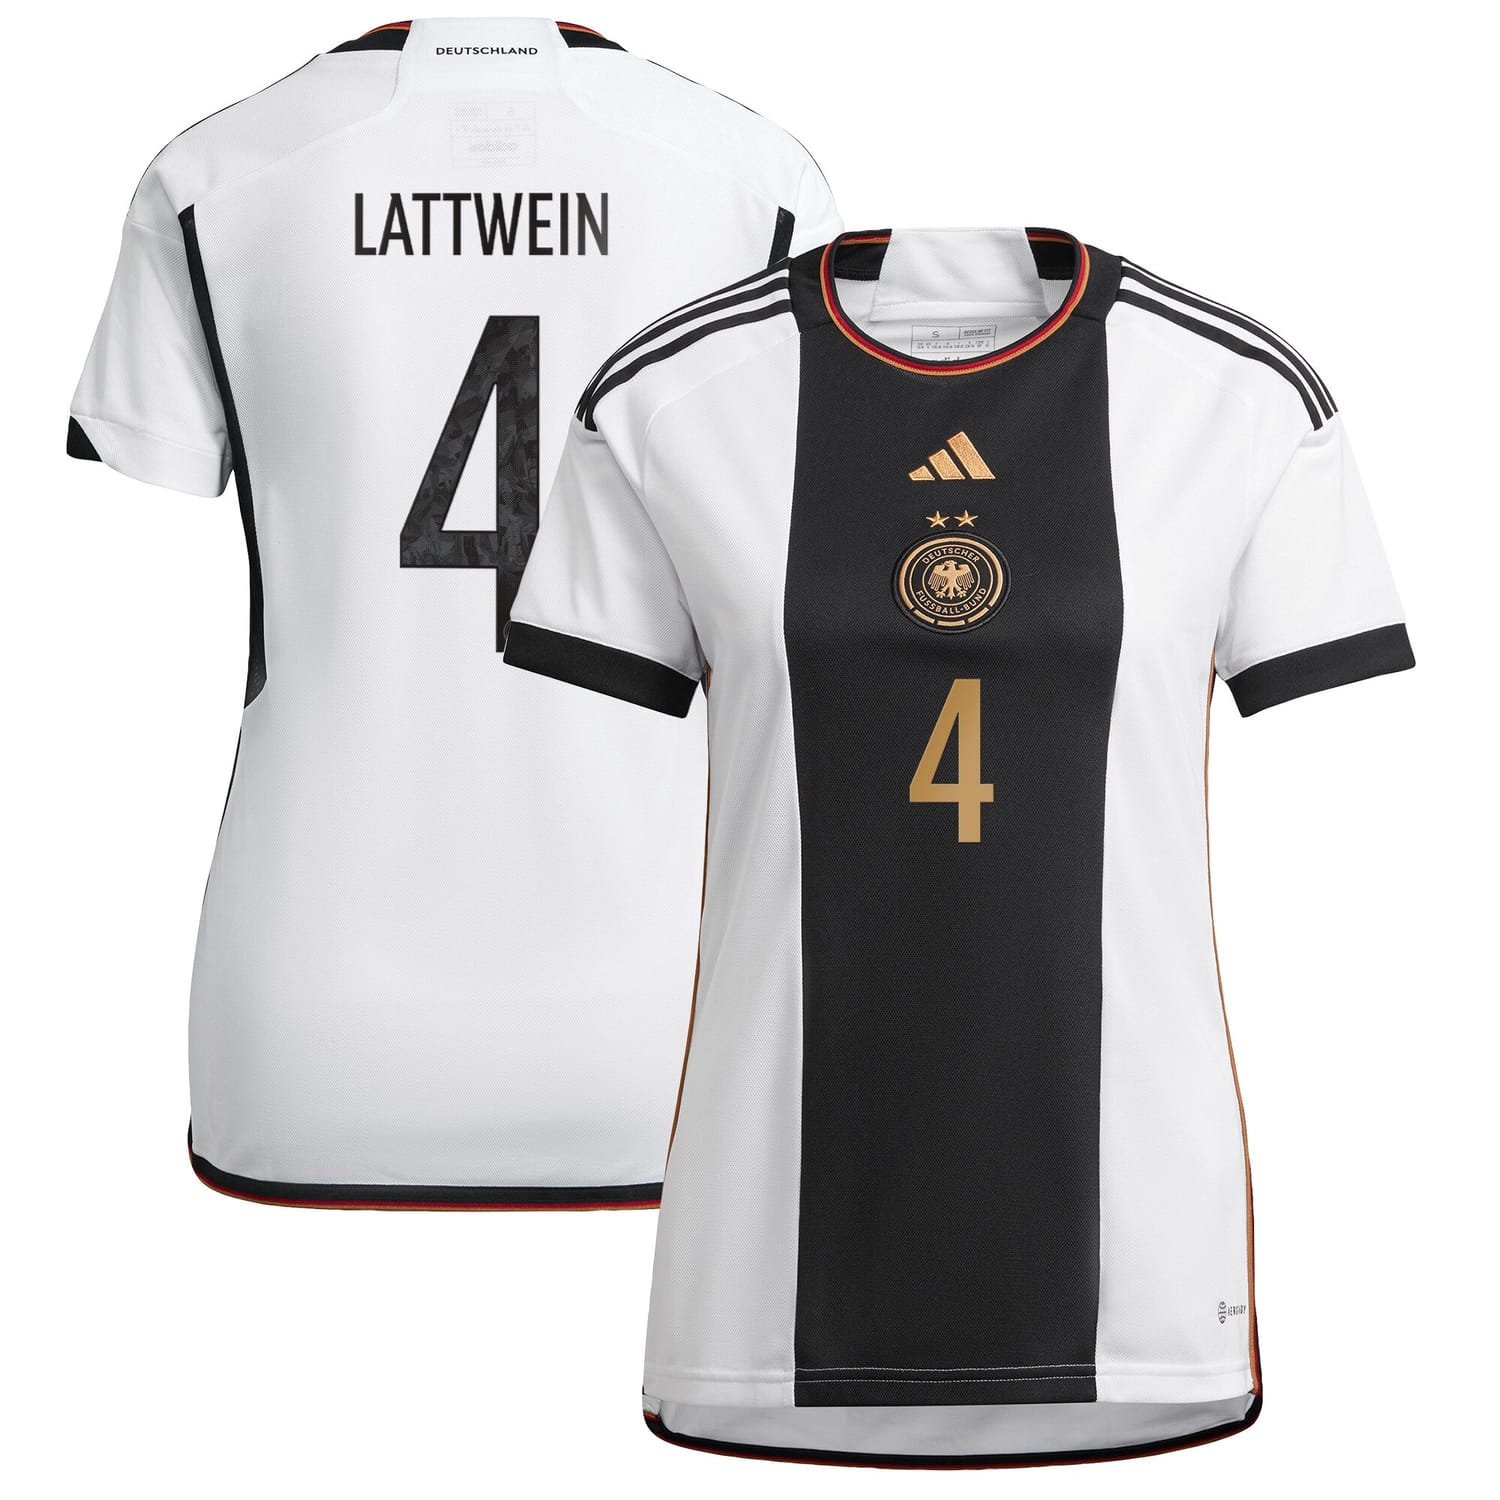 Germany National Team Home Jersey Shirt player Lena Lattwein 4 printing for Women